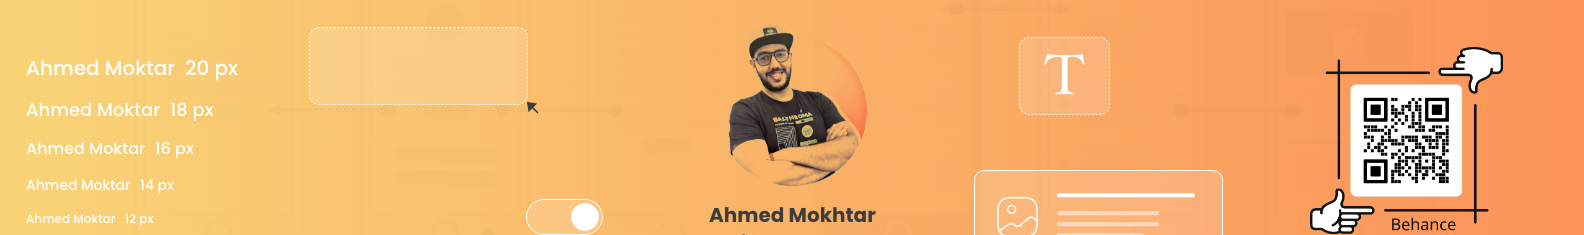 Profielbanner van Ahmed Mokhtar